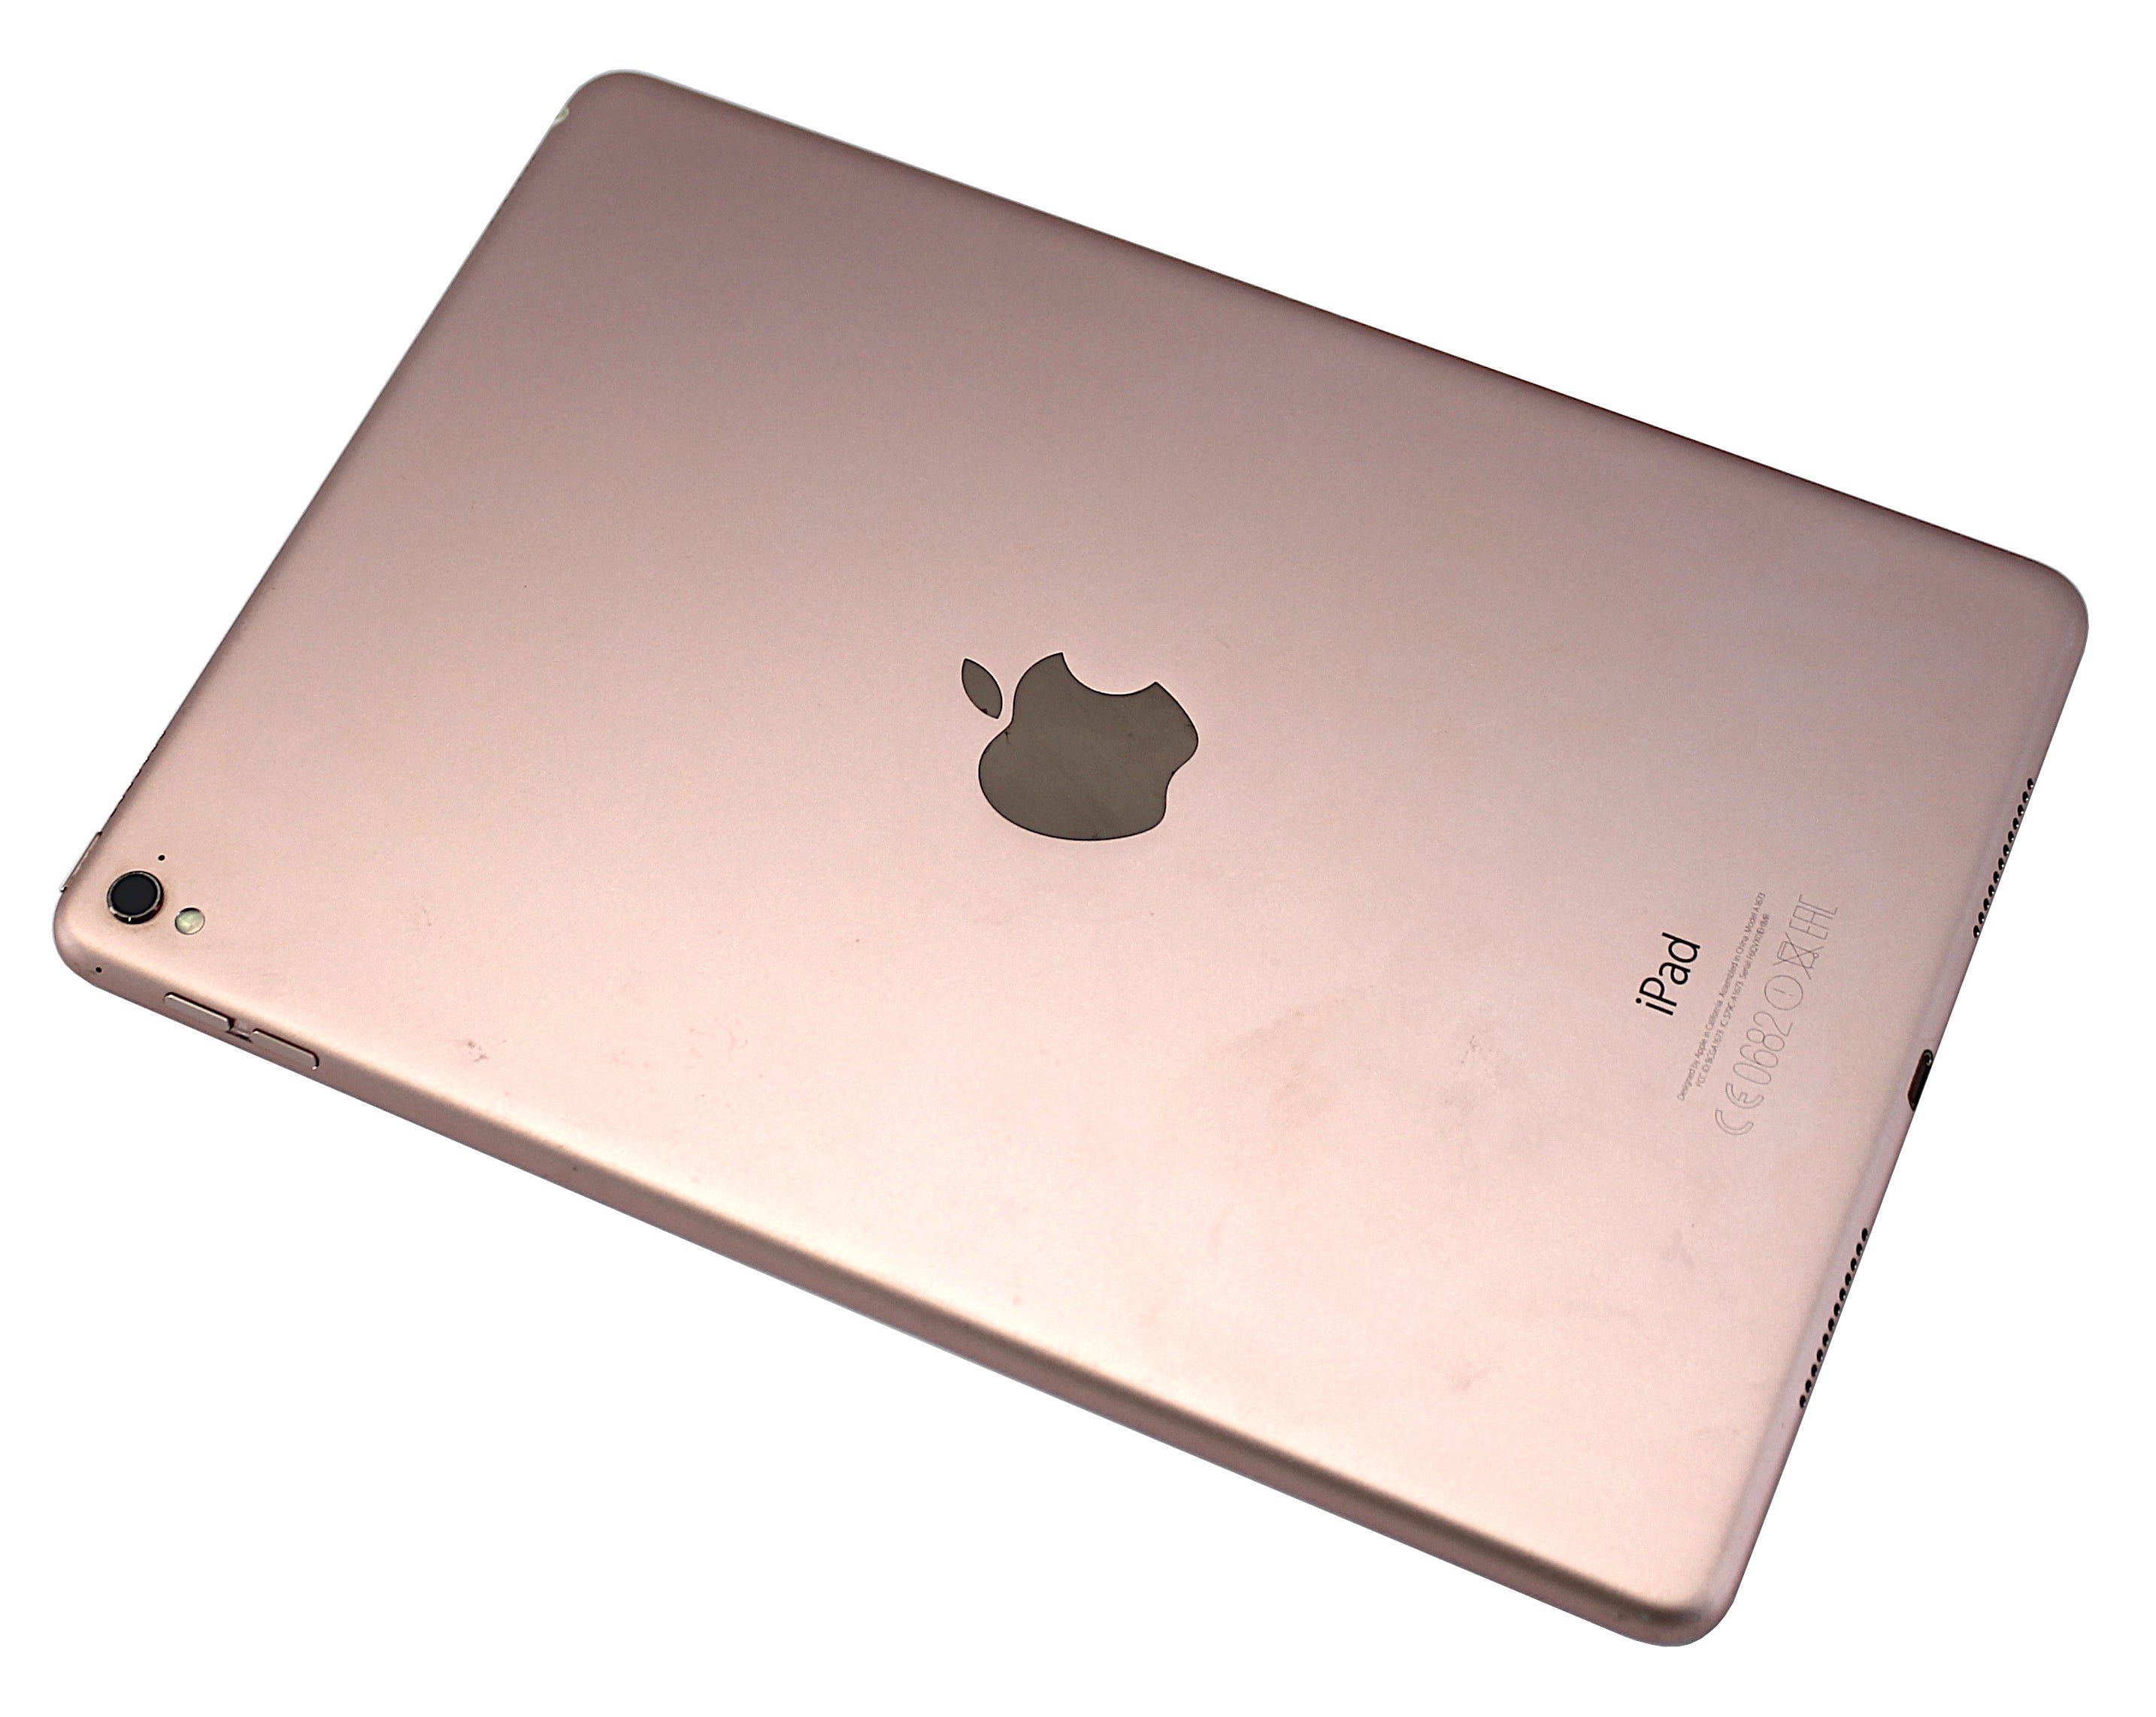 Apple iPad Pro Tablet, 9.7", 32GB, WiFi, Rose Gold, A1673